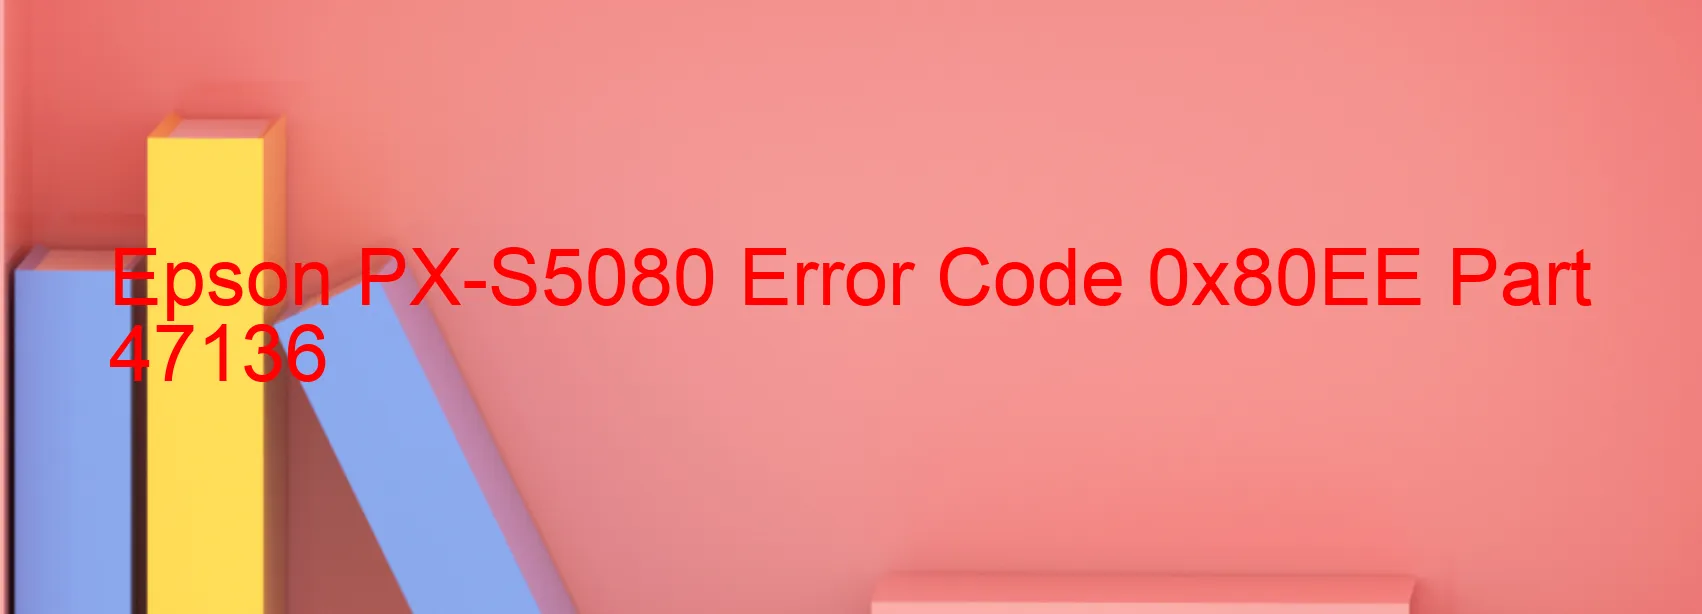 Epson PX-S5080 Error Code 0x80EE Part 47136